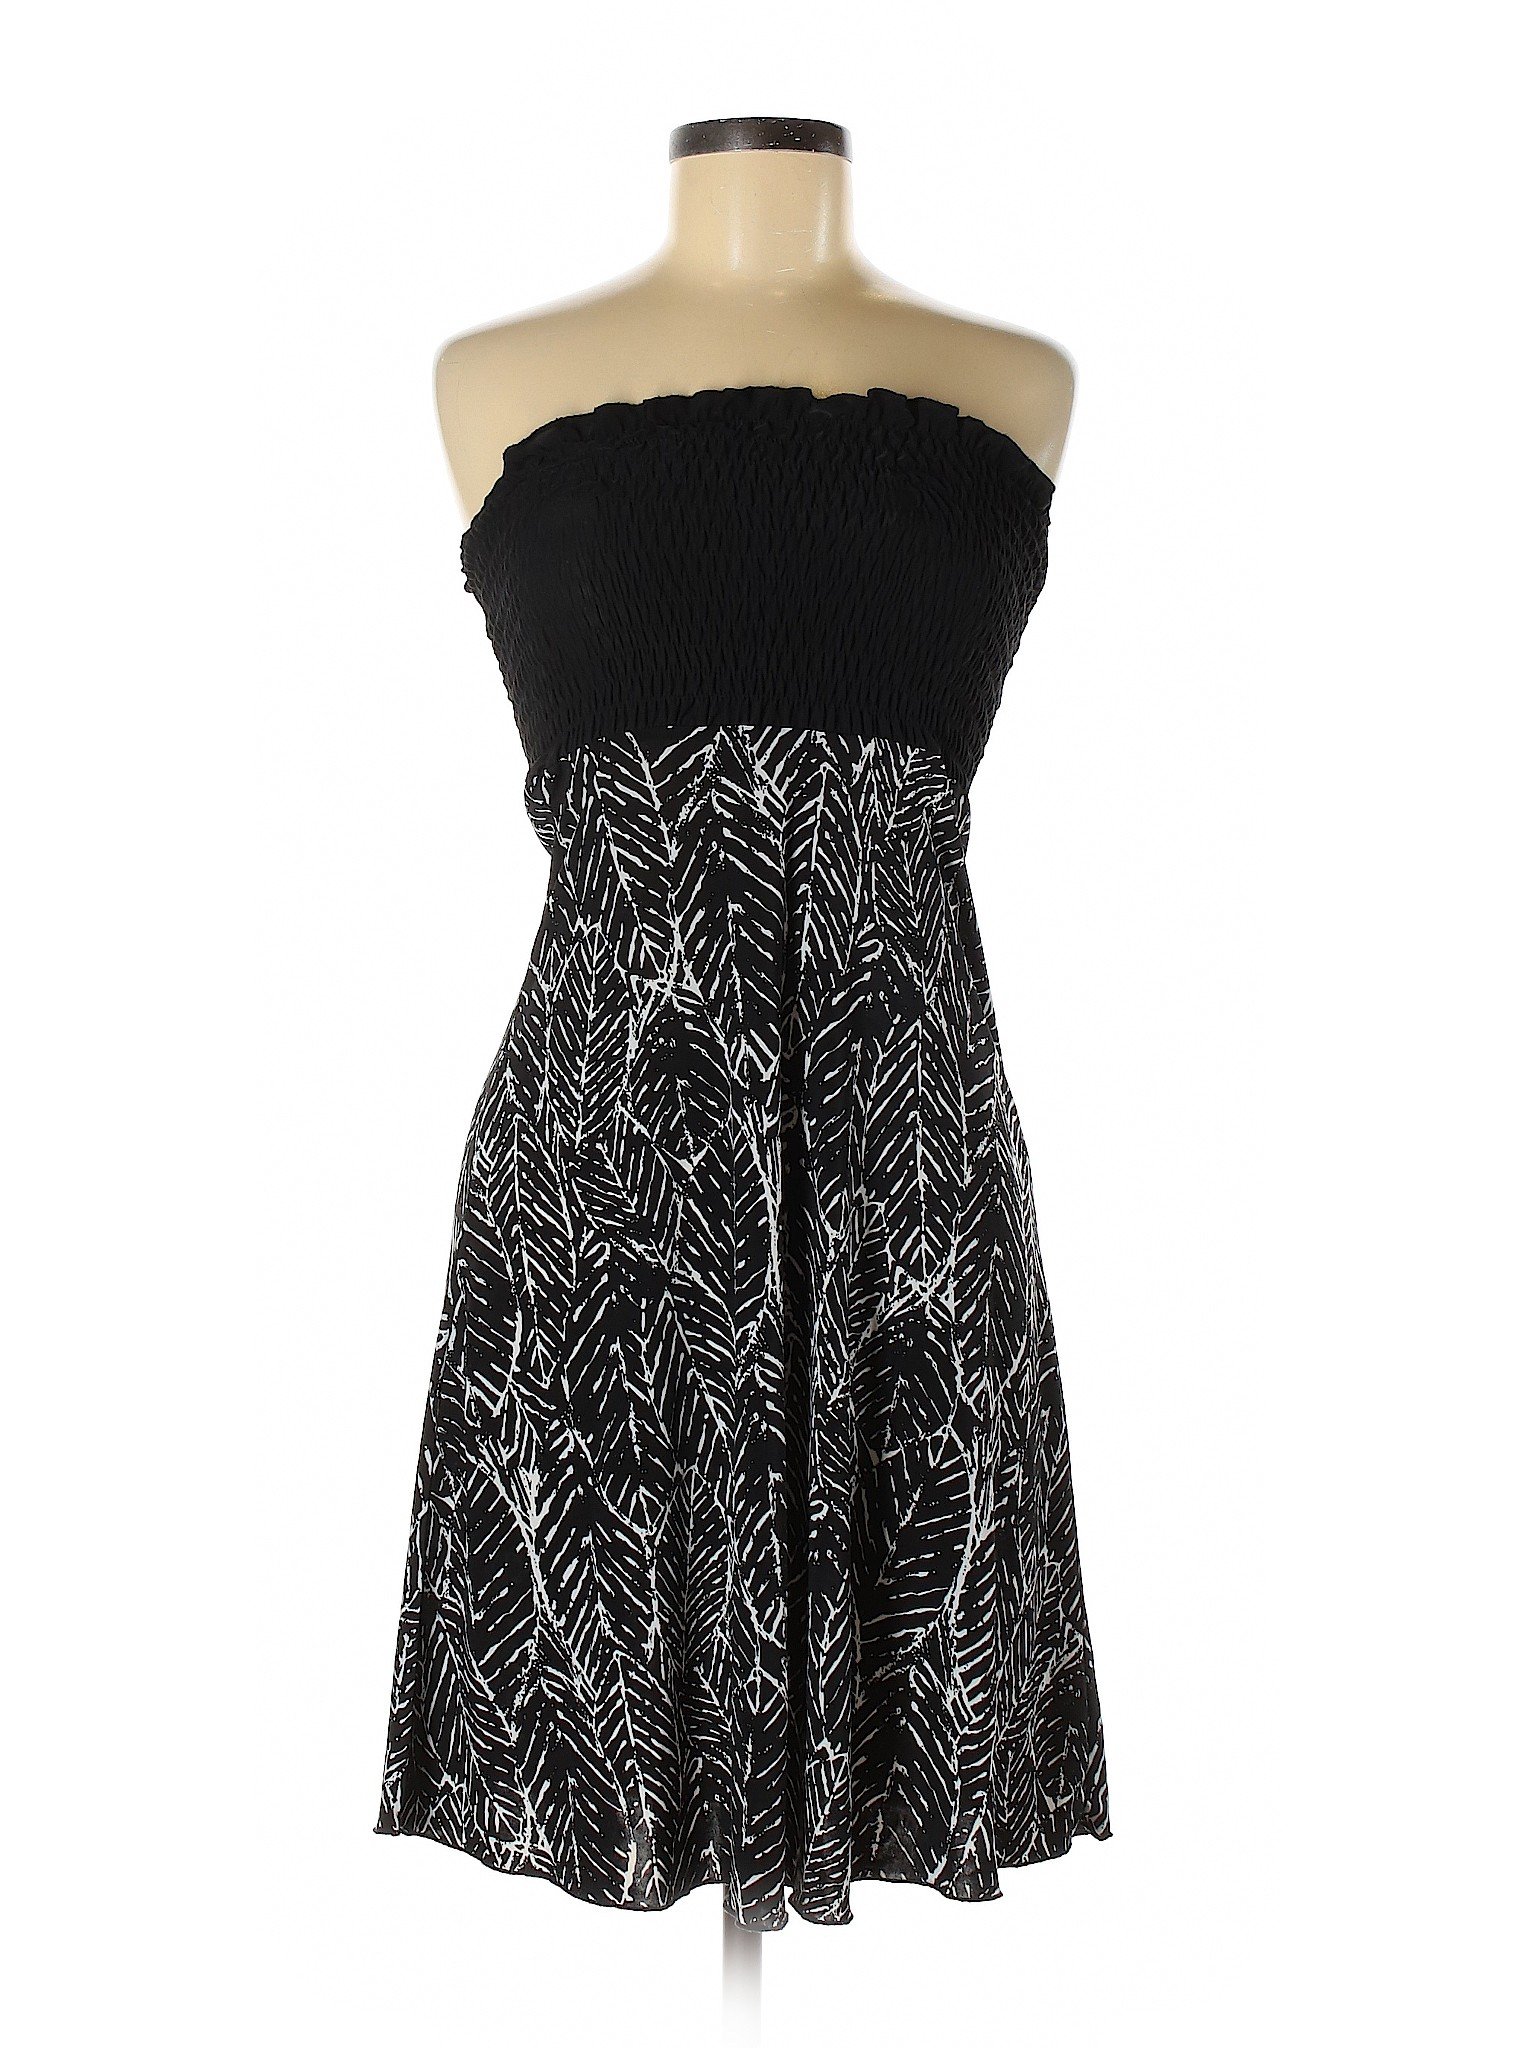 Portocruz Women Black Casual Dress S | eBay